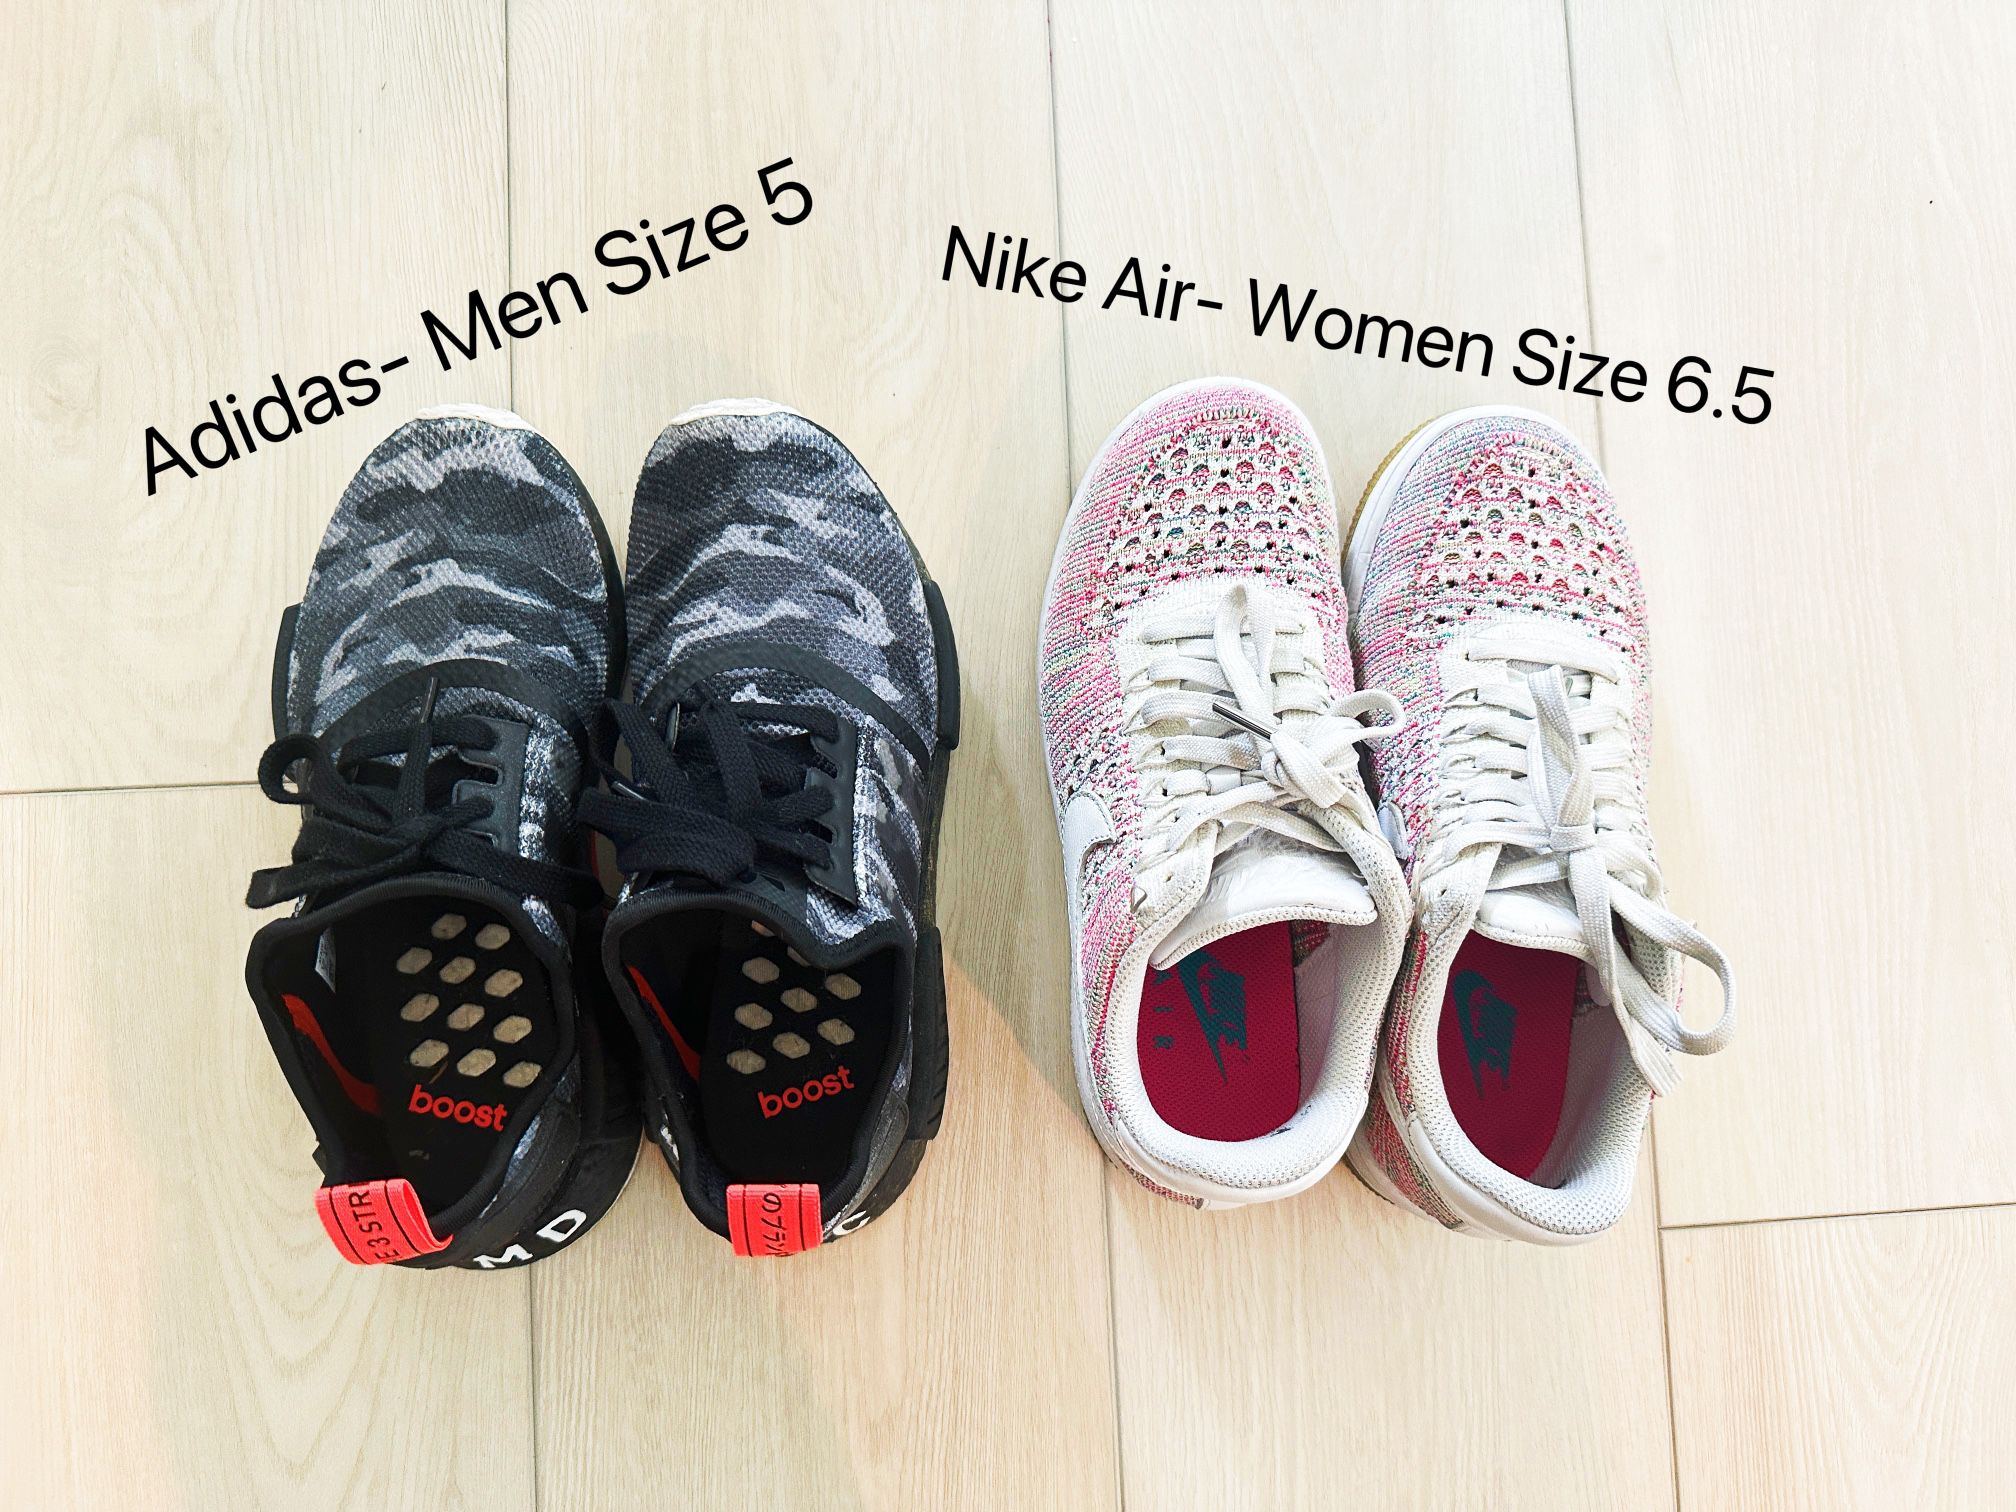 Nike, Adidas Shoes for Women, Bundle of 2